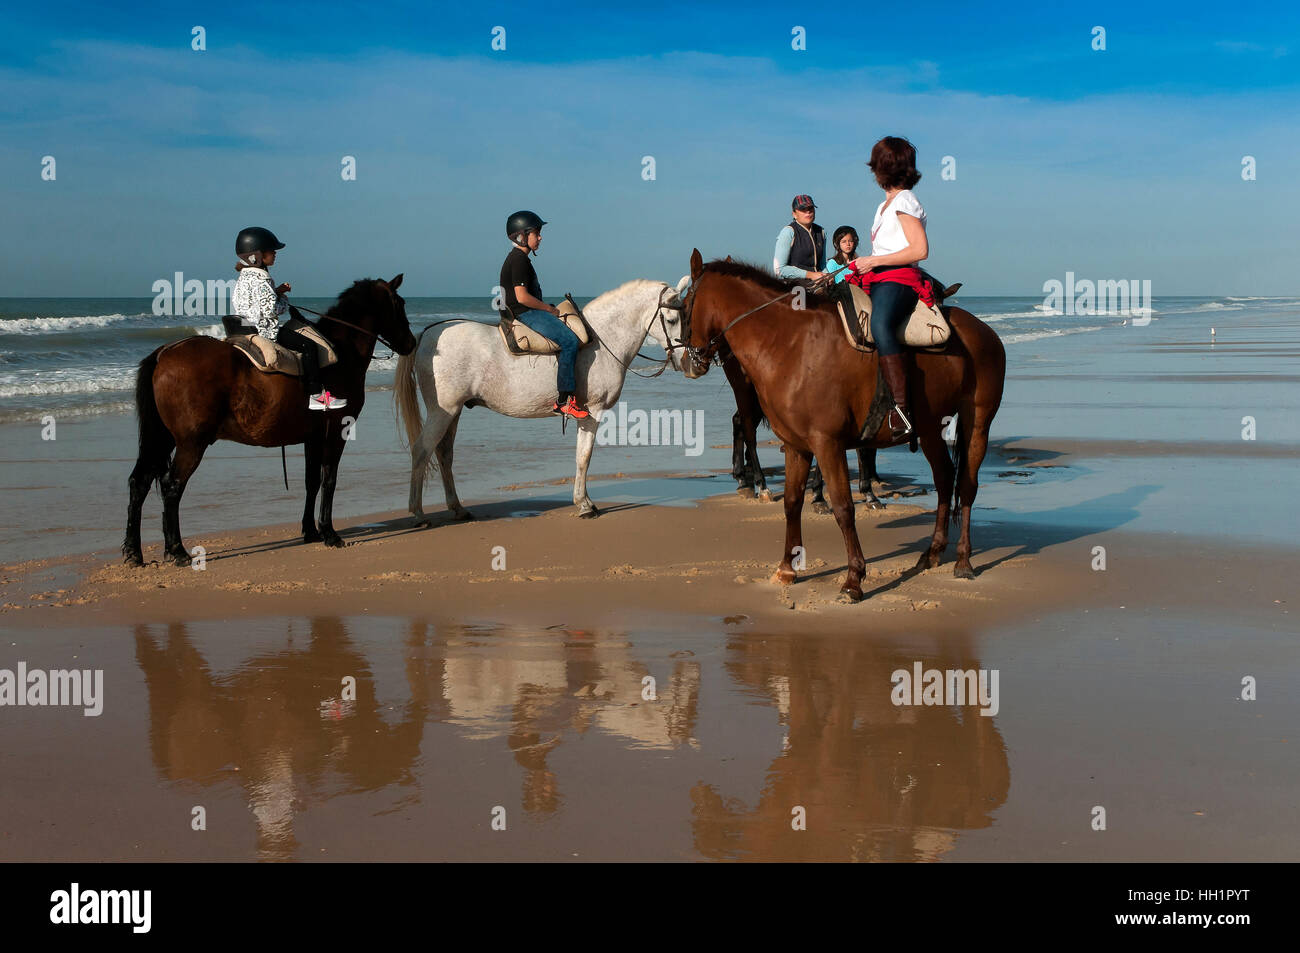 Equestrian tourism on the beach, Donana Natural Park, Matalascanas, Huelva province, Region of Andalusia, Spain, Europe Stock Photo